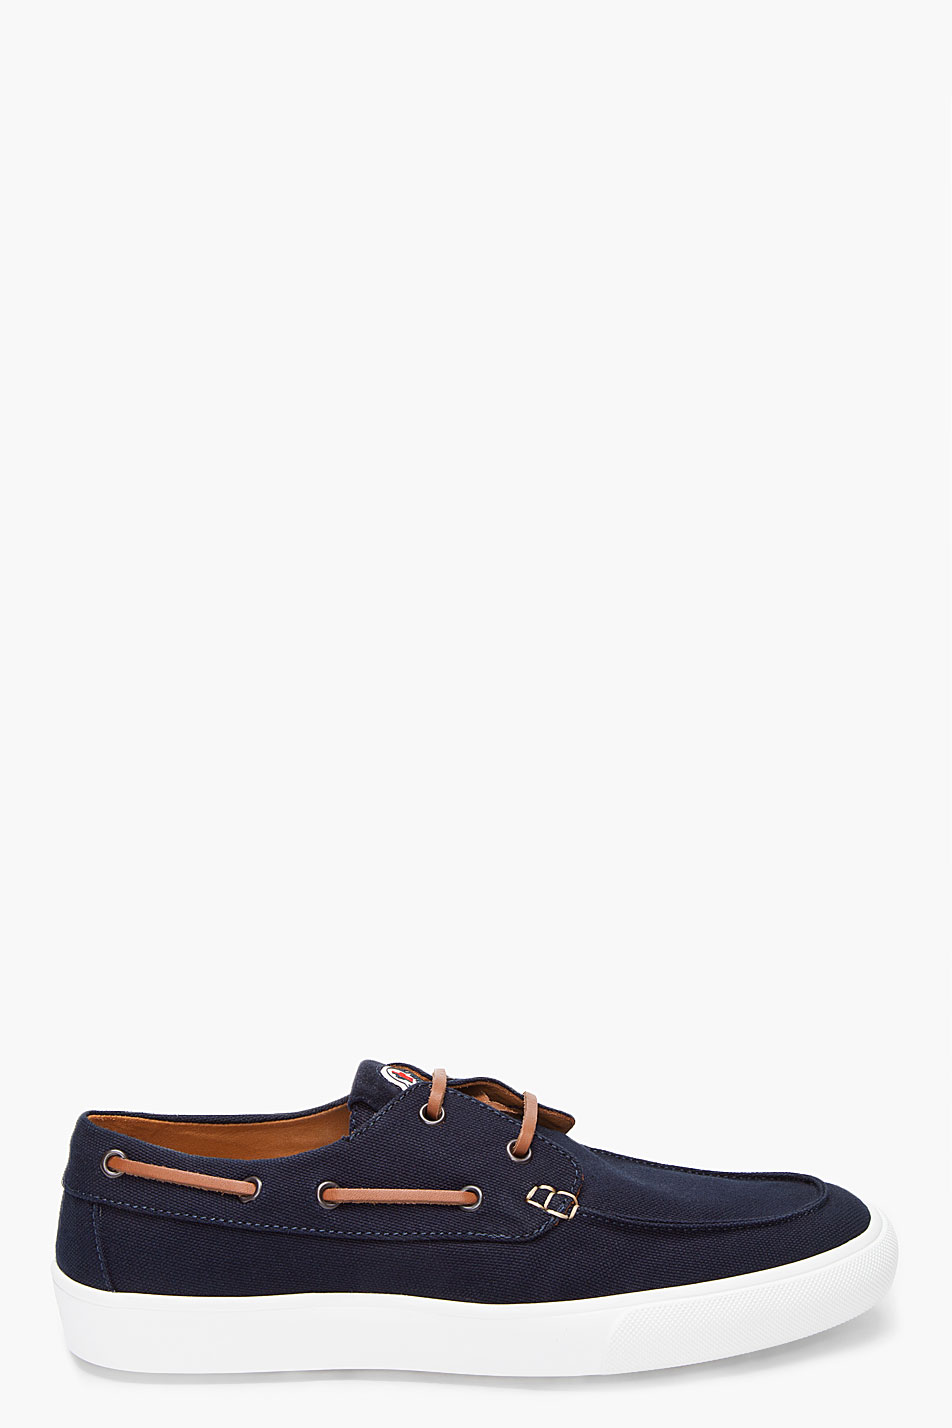 Moncler Boat Shoe in Navy (Blue) for 